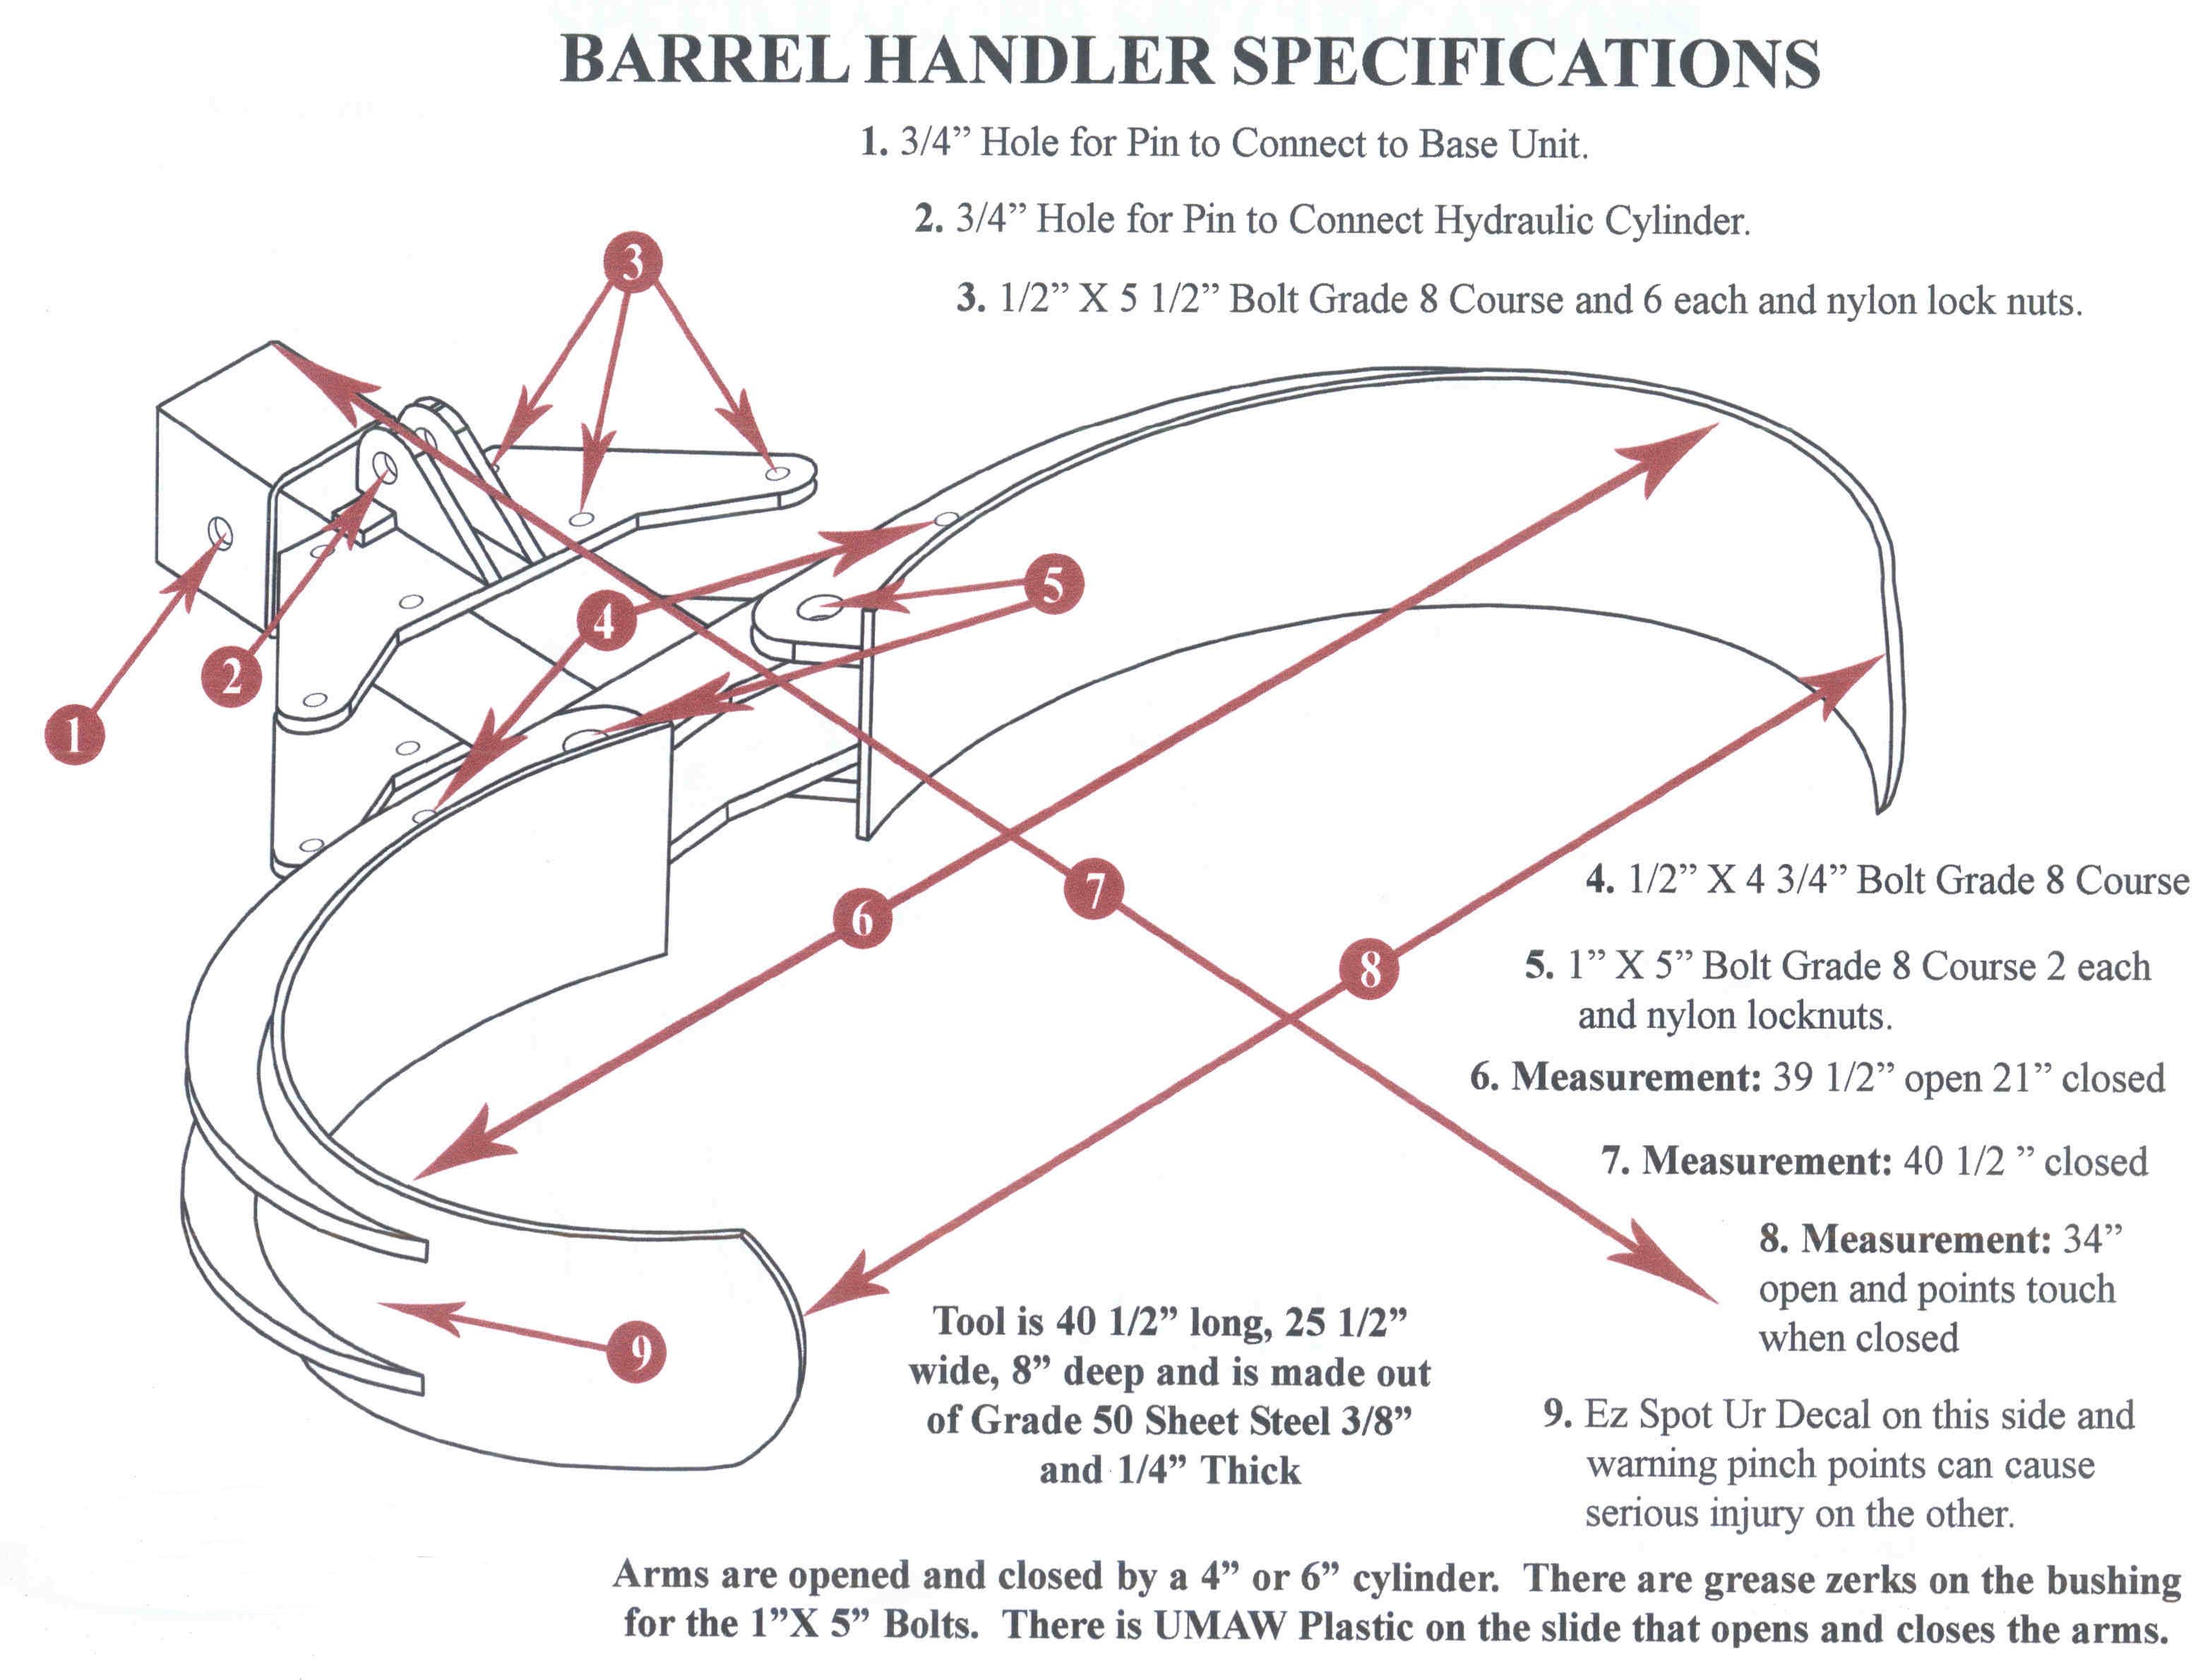 Specifications Barrel Handler Tool